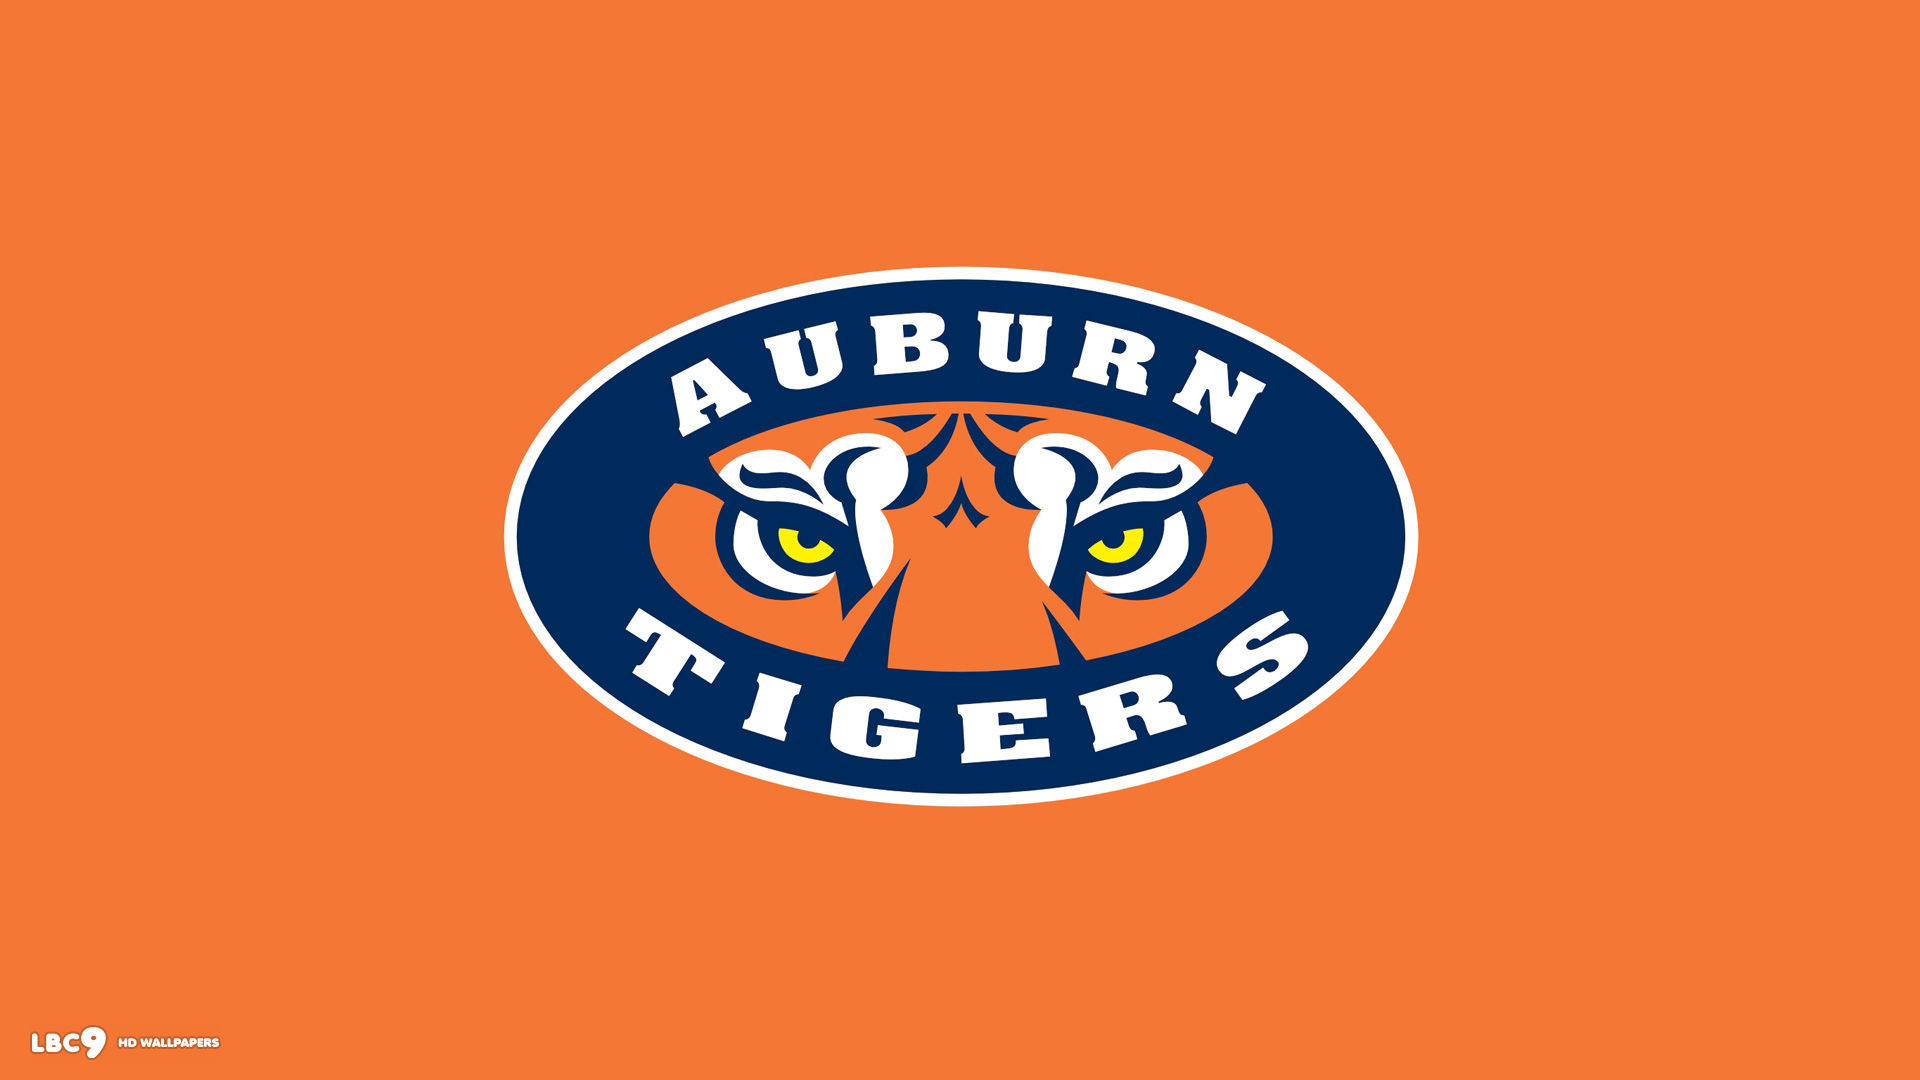 Auburn ATH auburn tigers wallpaper 1 / 6 college athletics hd backgrounds